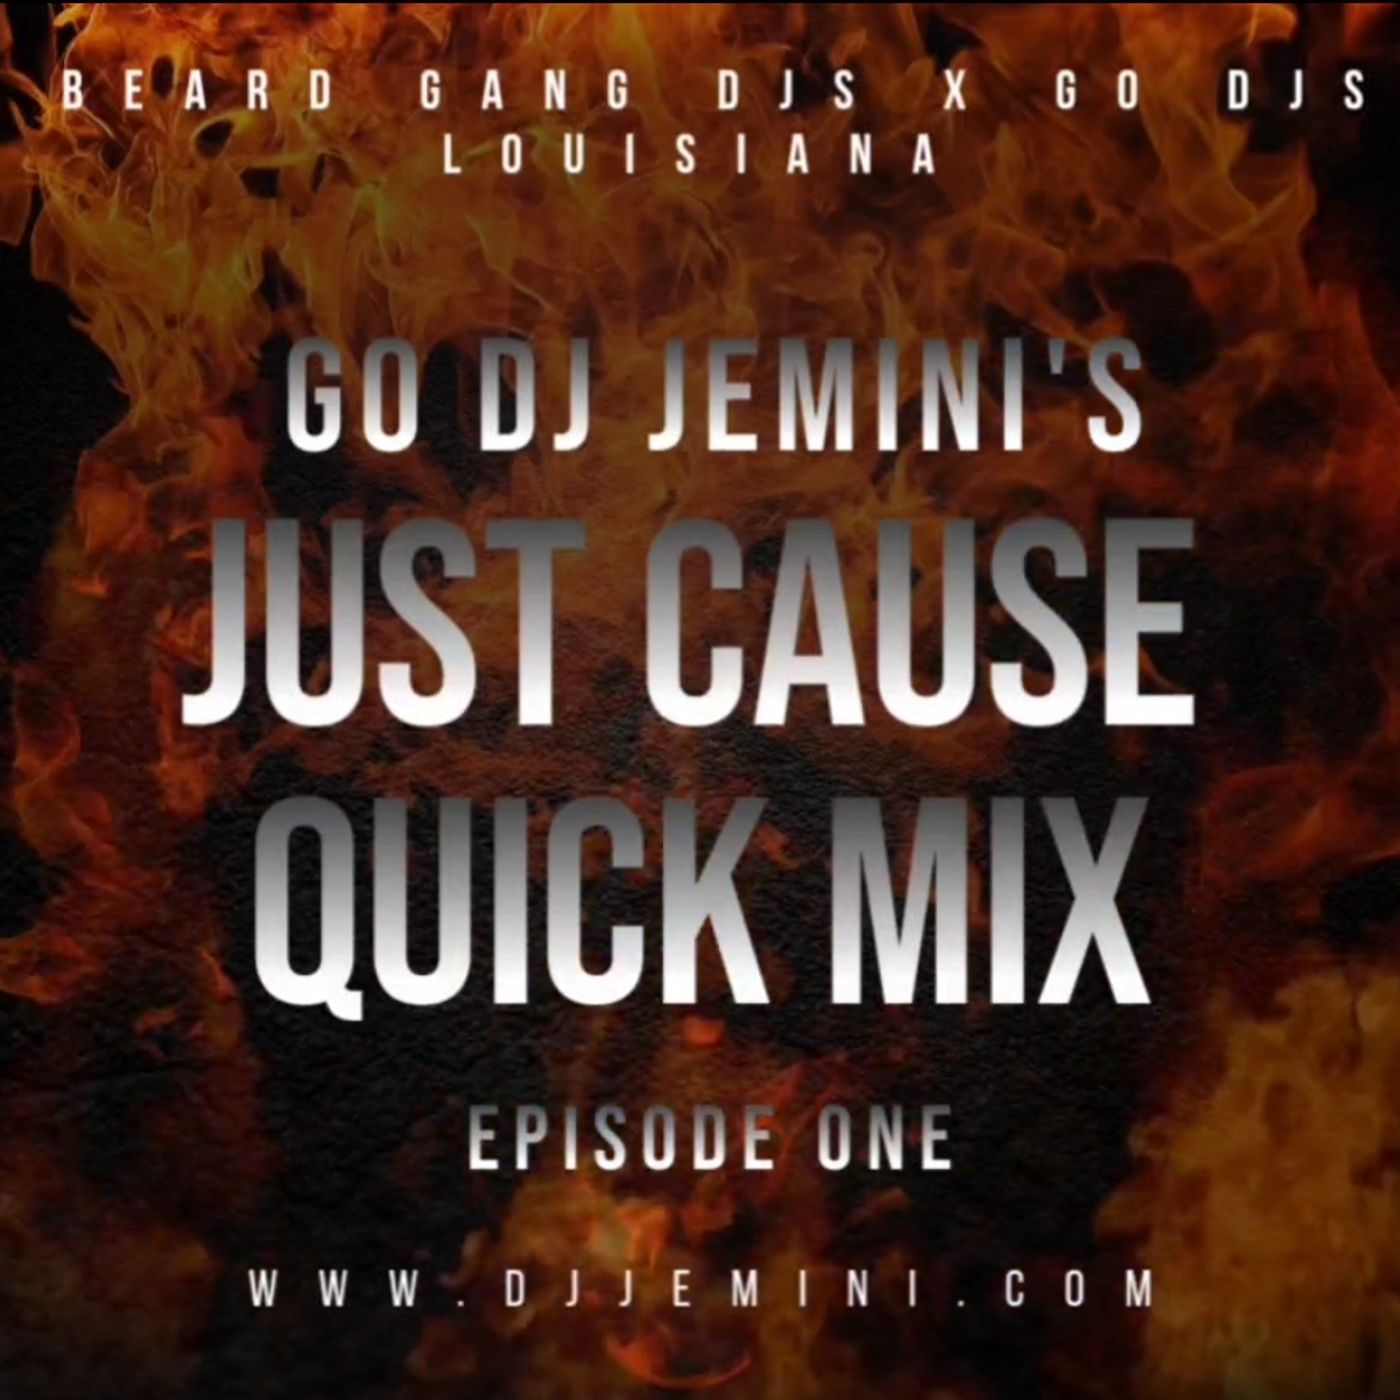 Beard Gang DJs x Go DJs Louisiana Presents: Go DJ Jemini's Just Cause Quick Mix